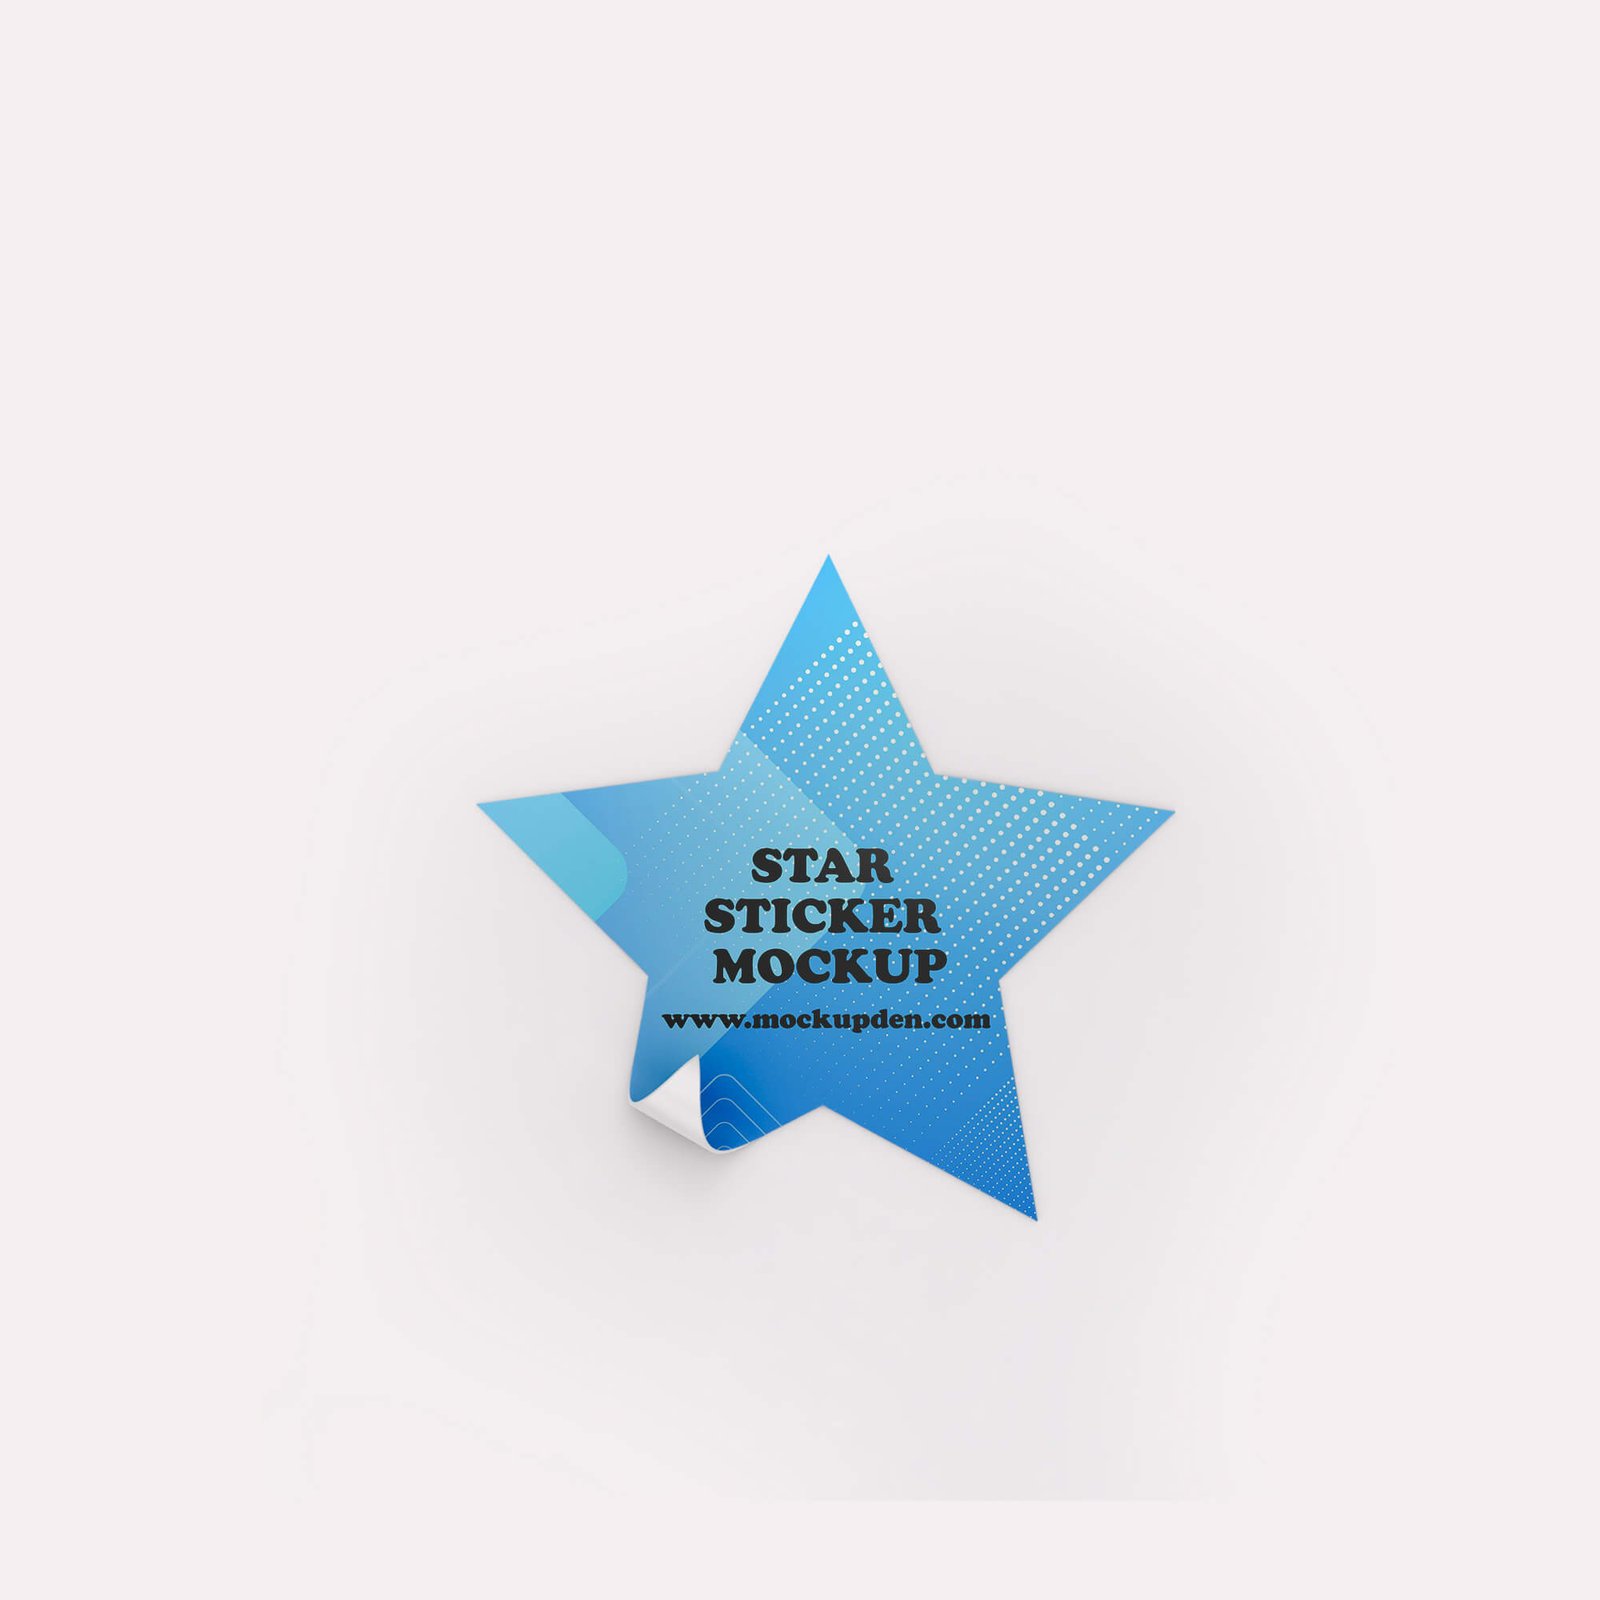 Design Free Star Sticker Mockup PSD Template